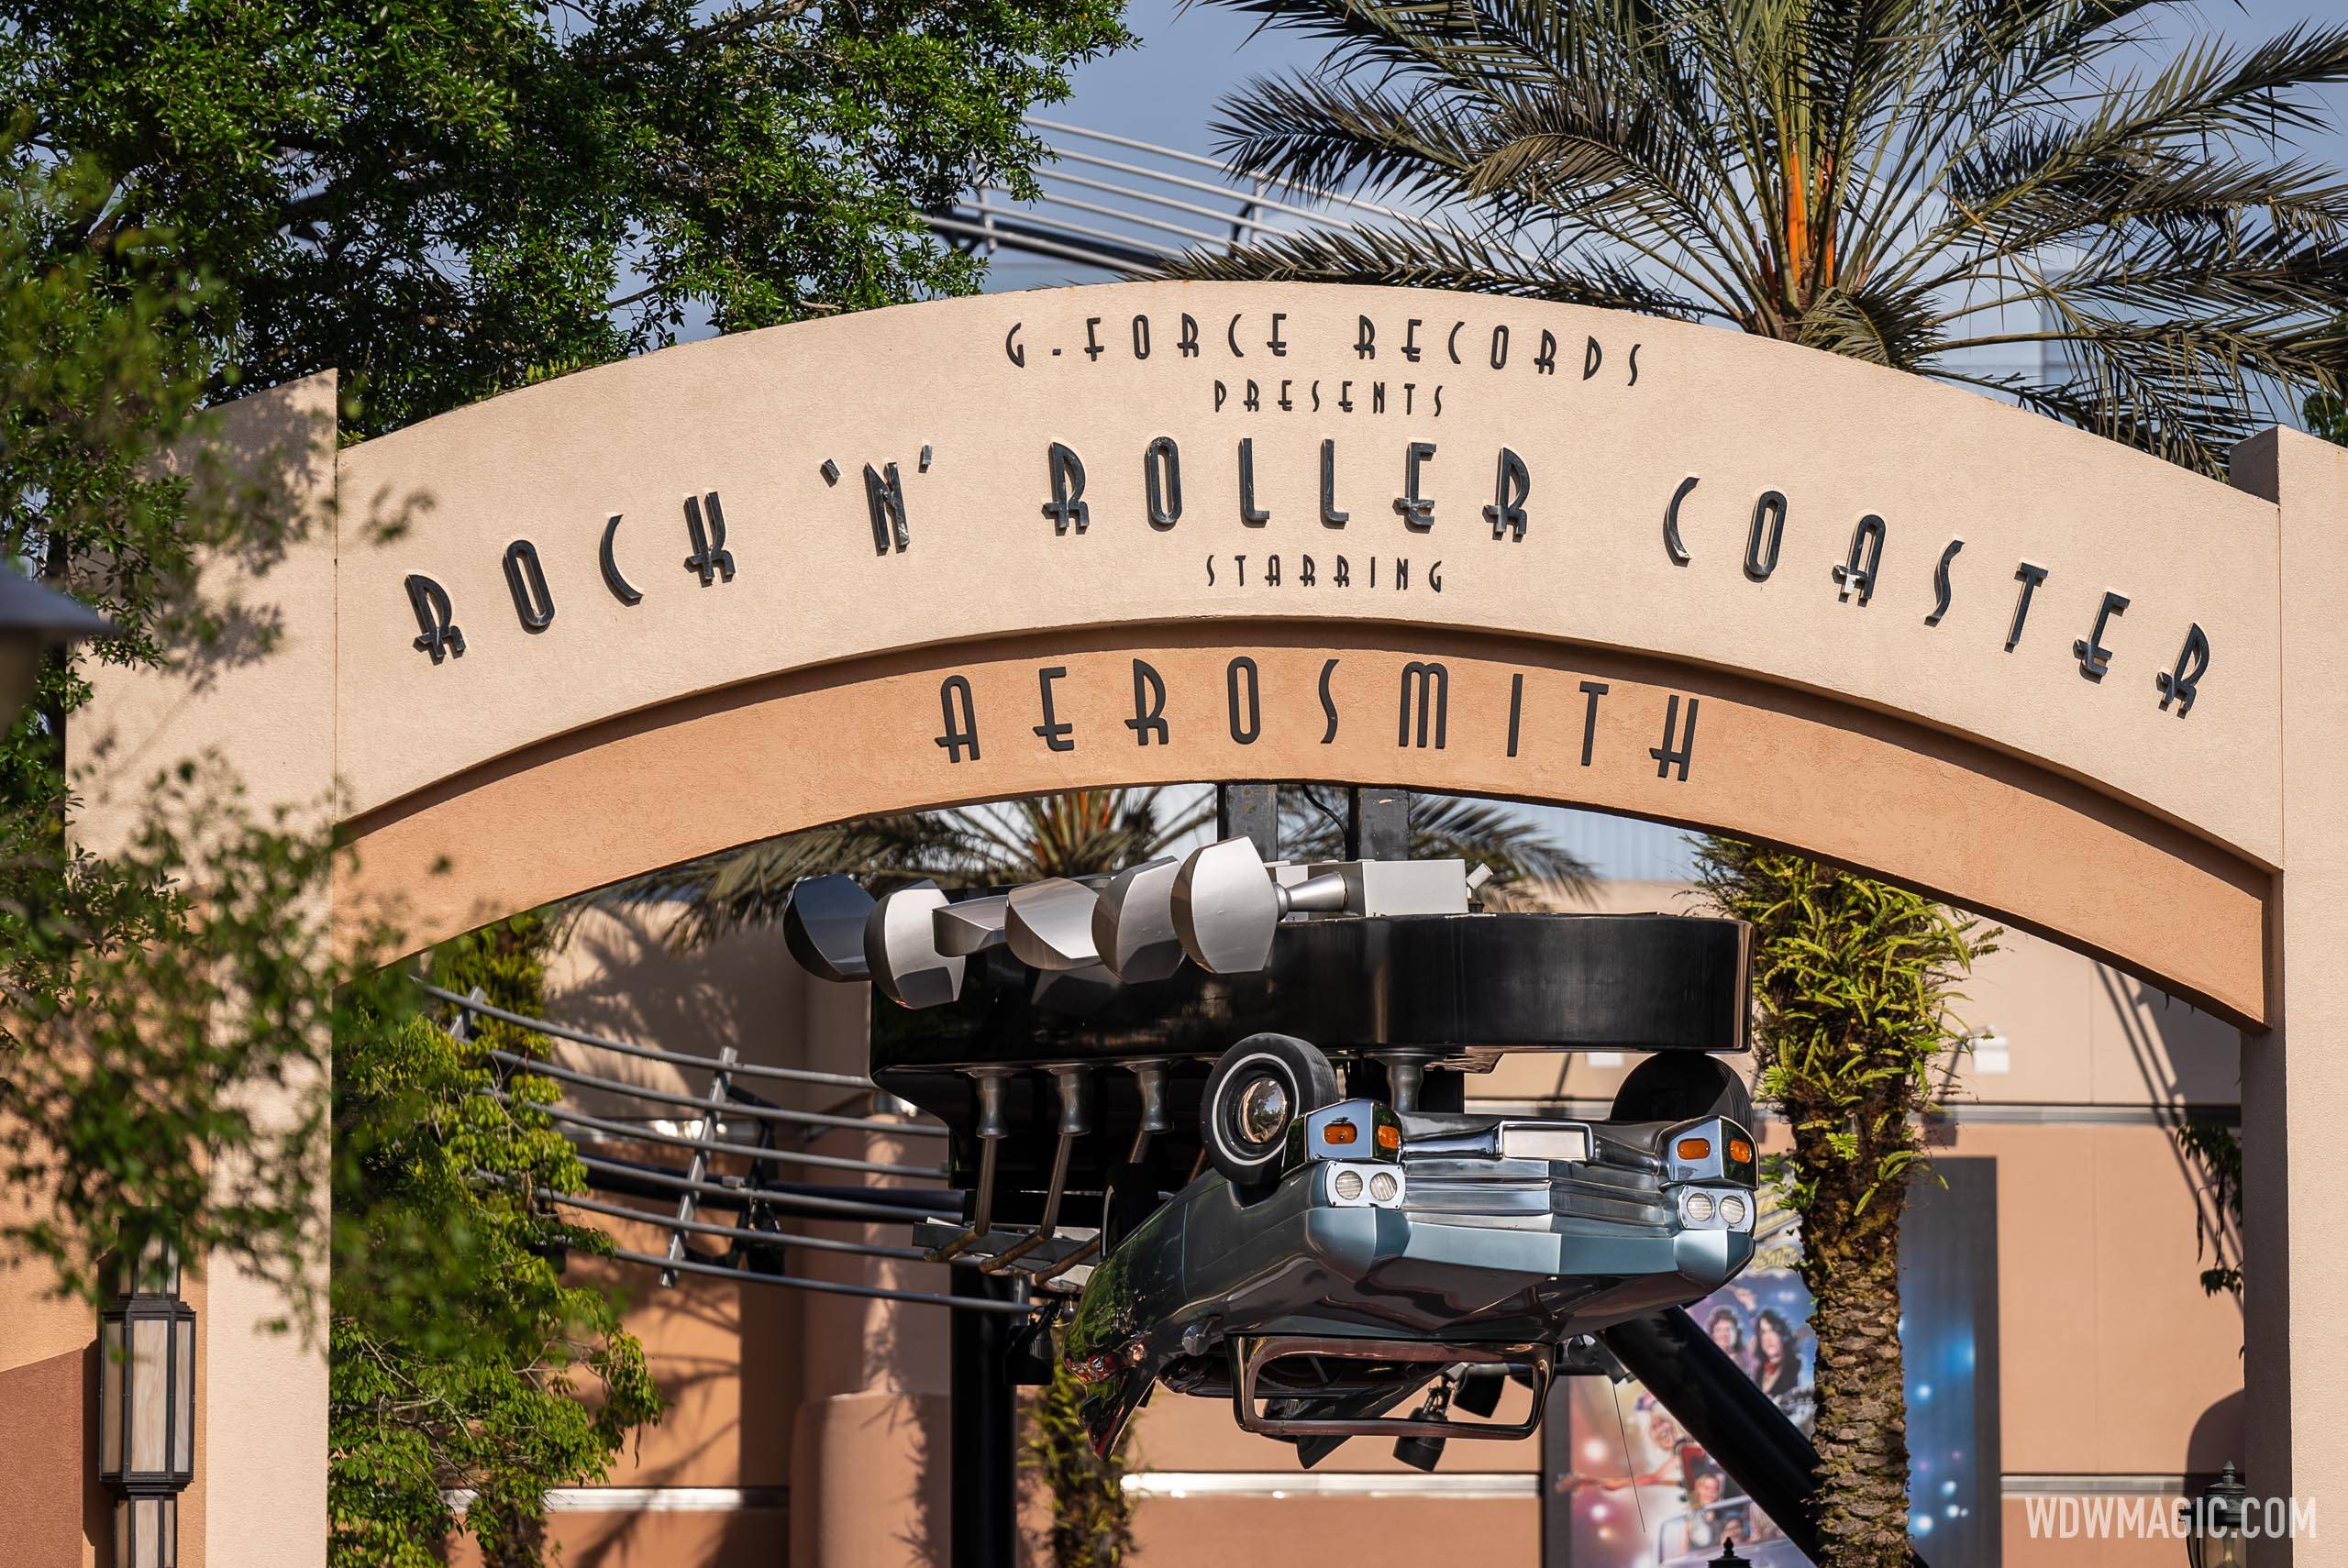 Rock 'n' Roller Coaster overview